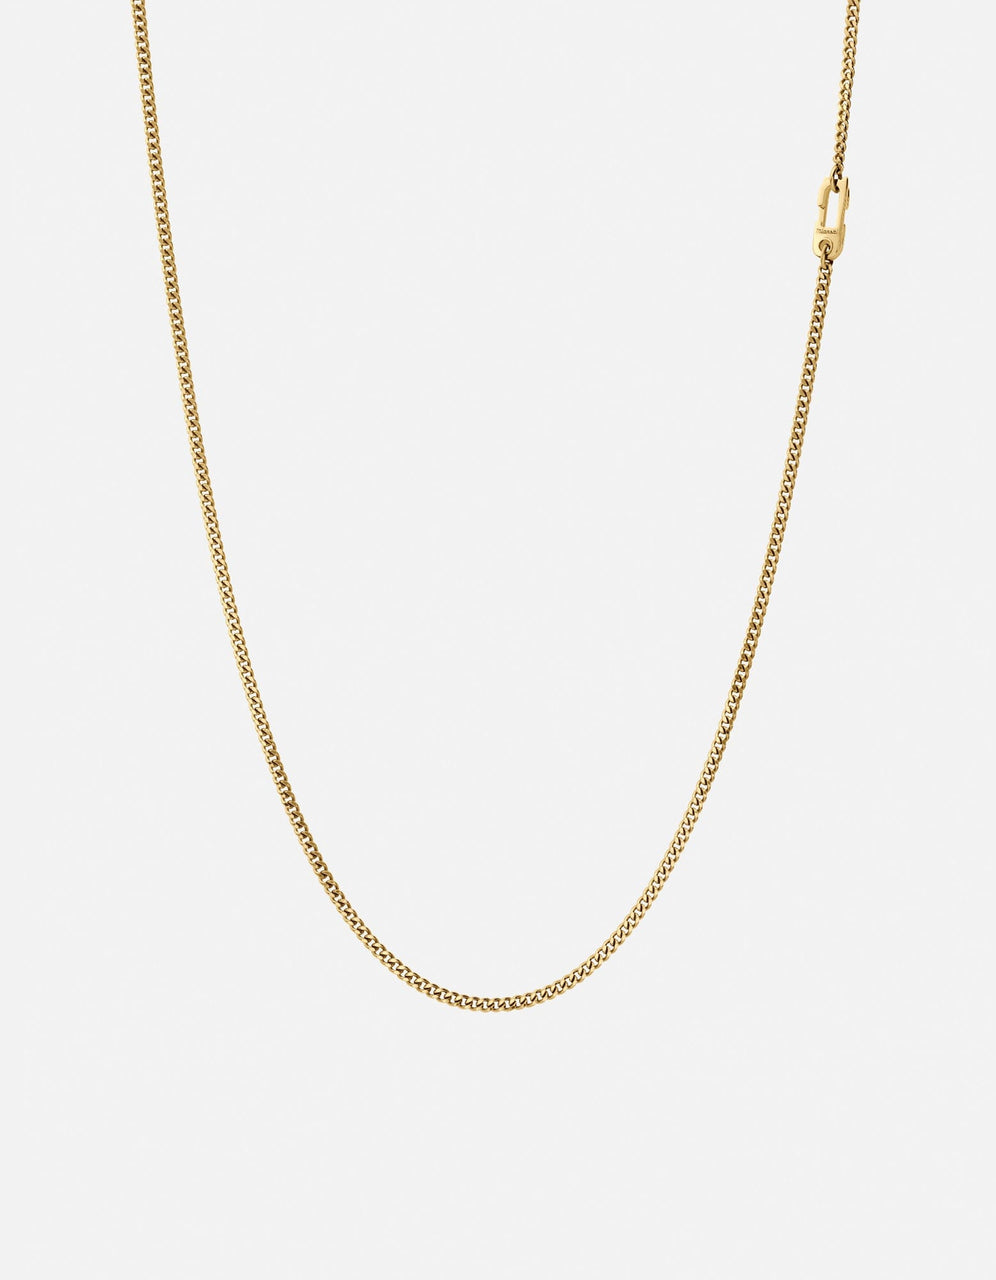 Miansai 2mm Mini Annex Chain Necklace, Gold Vermeil, 24 in.